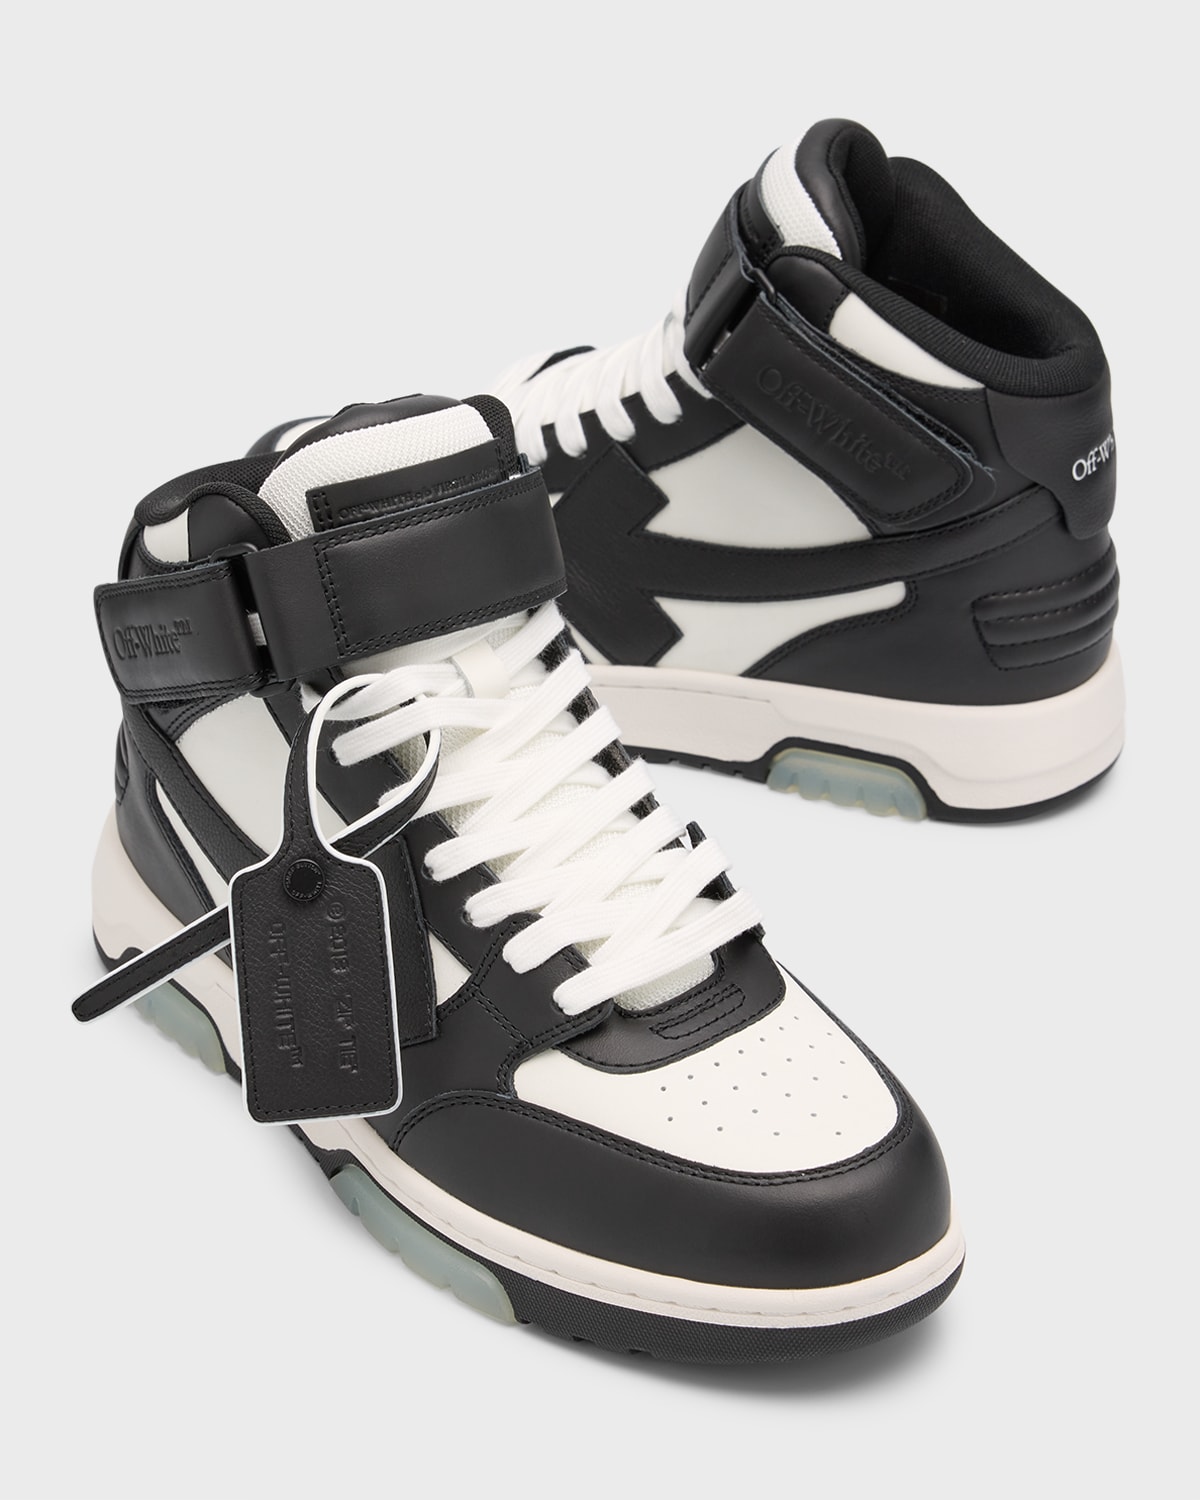 Louis Vuitton, Navy Slipstream High Top Sneakers - Unique Designer